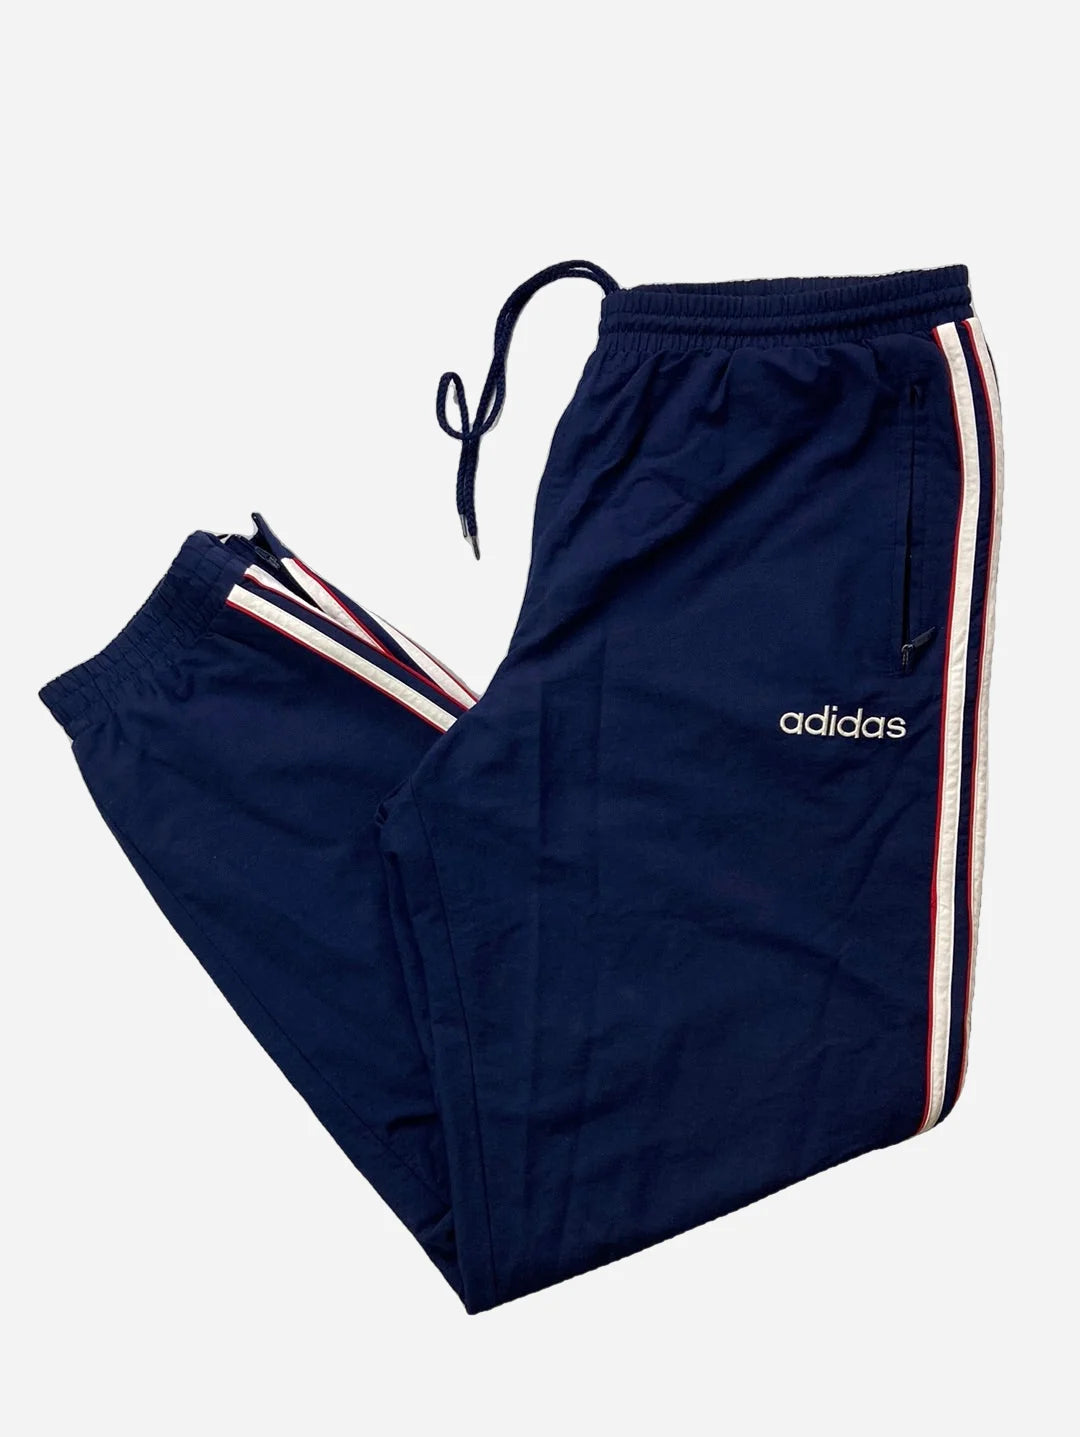 Adidas Track Pants (XL)